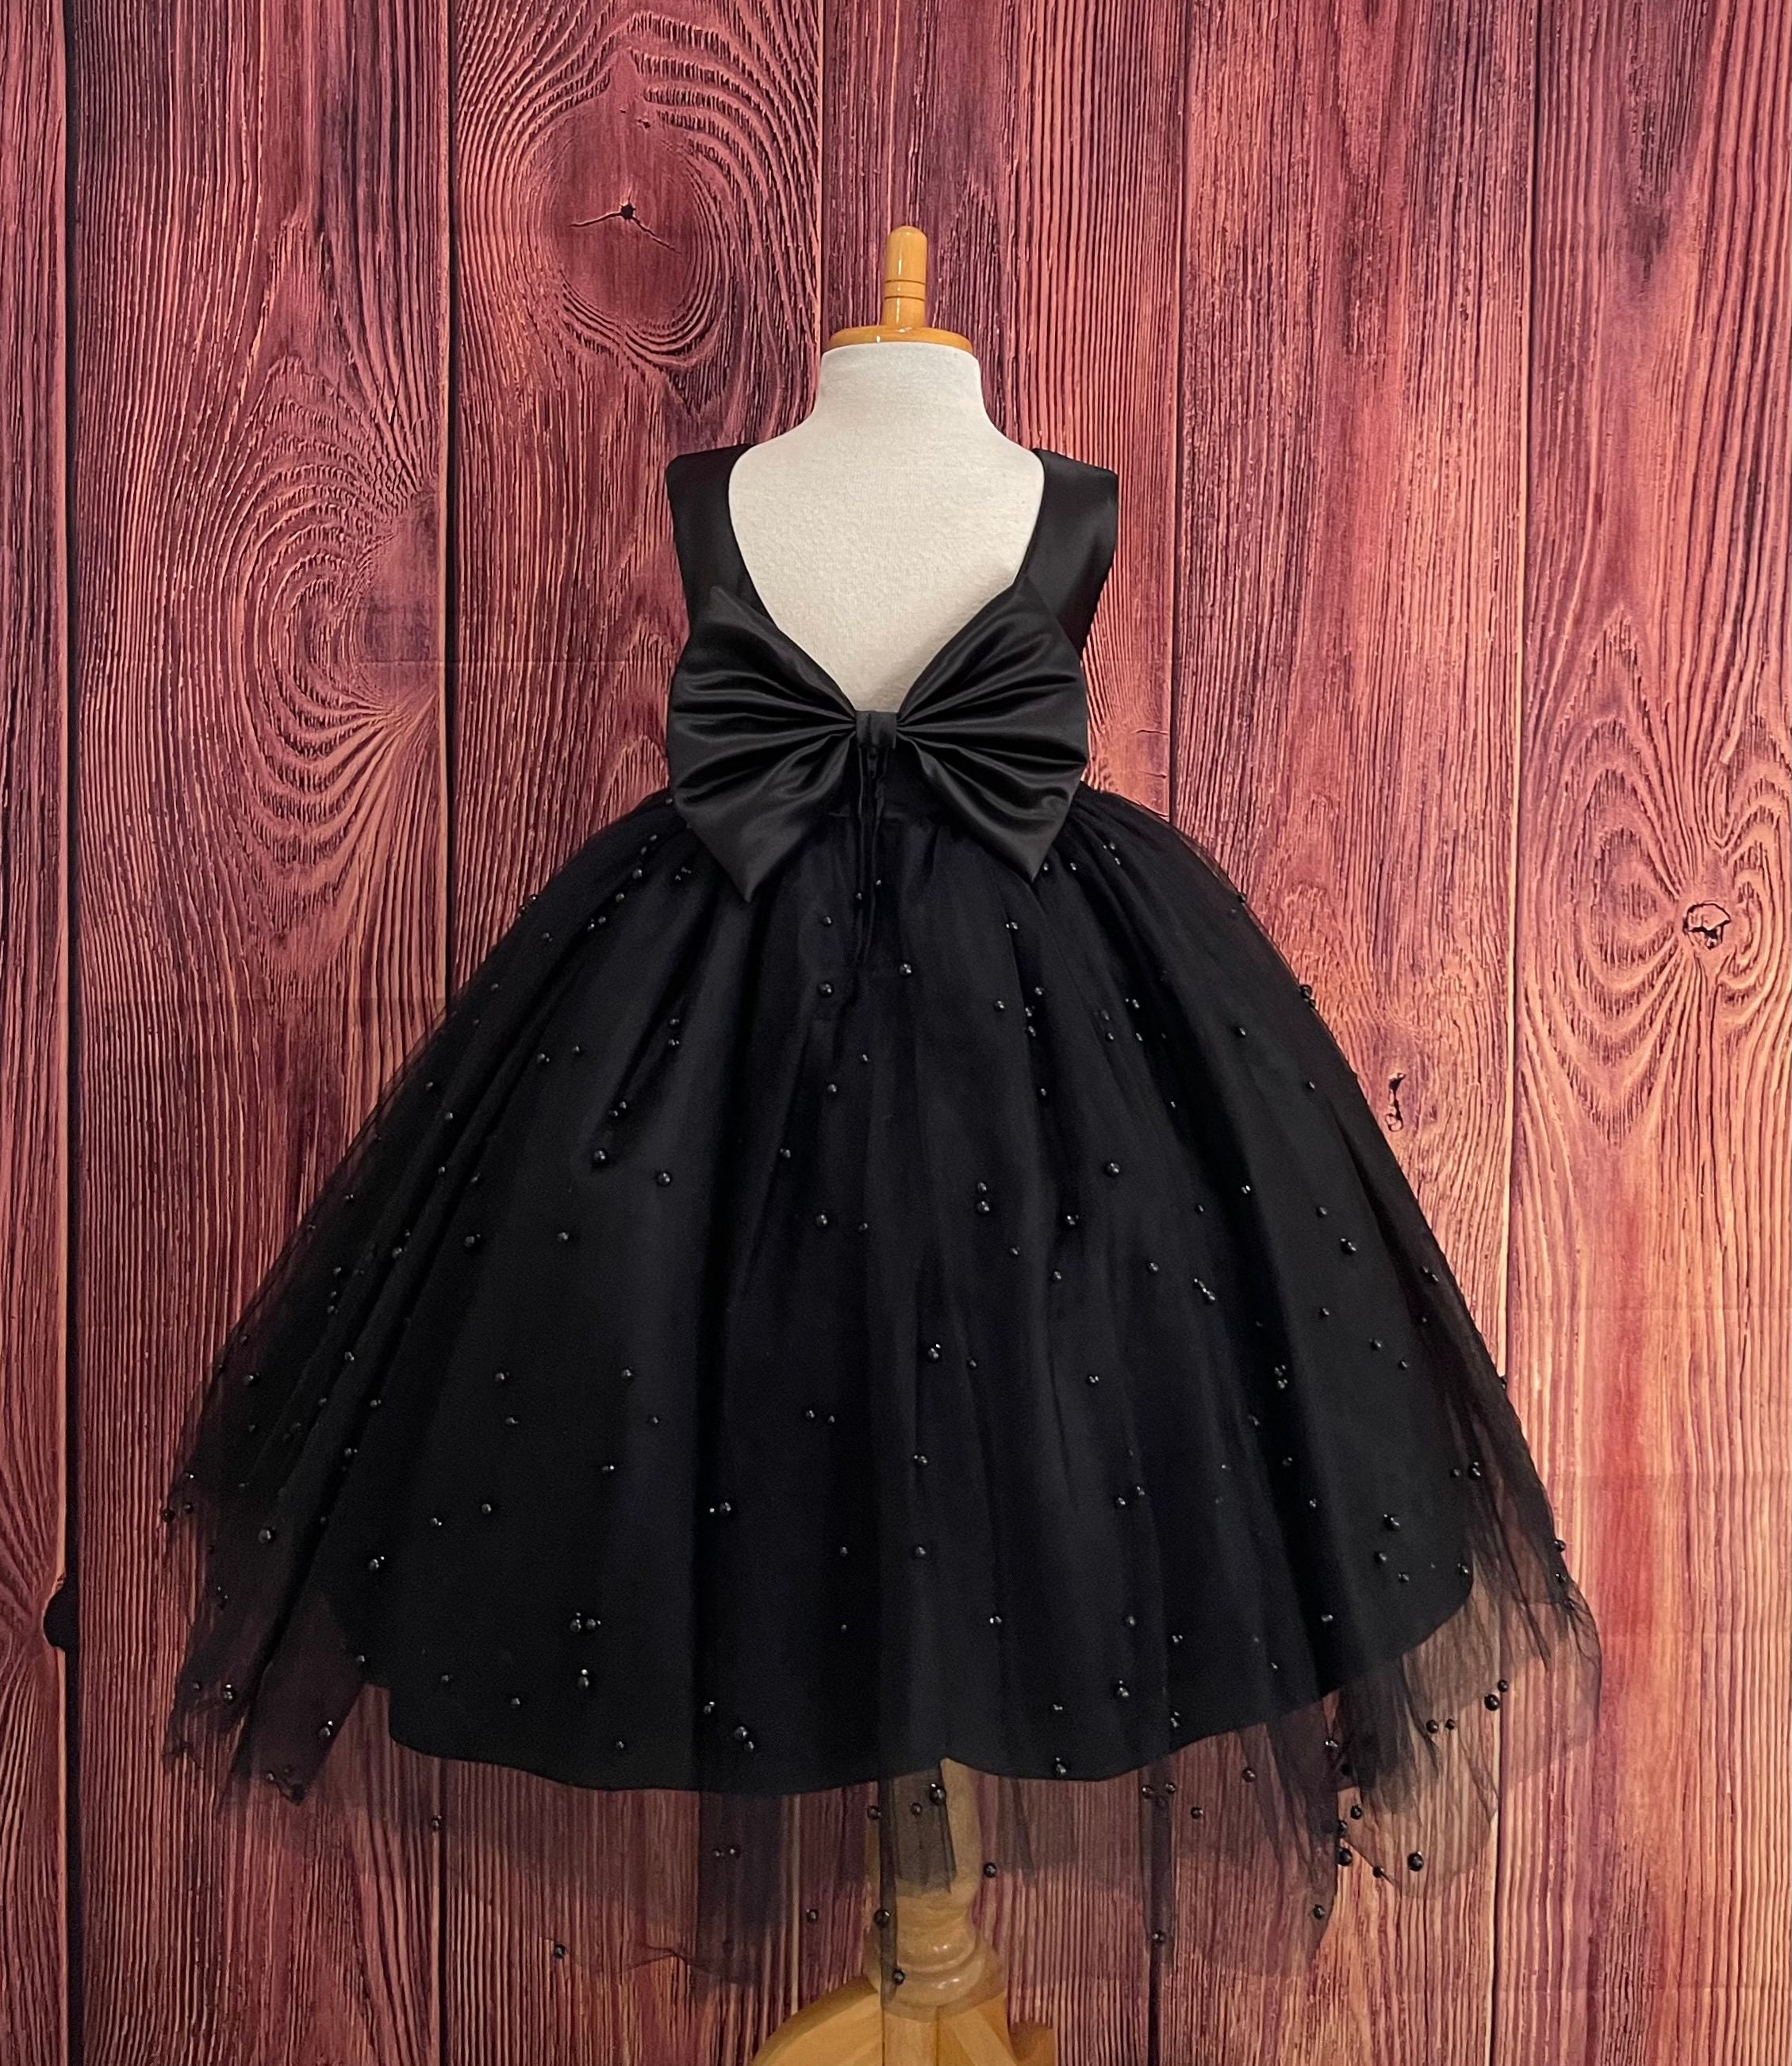 BMbridal Black Lace Princess Ball Gown Flower Girl Dress | BmBridal